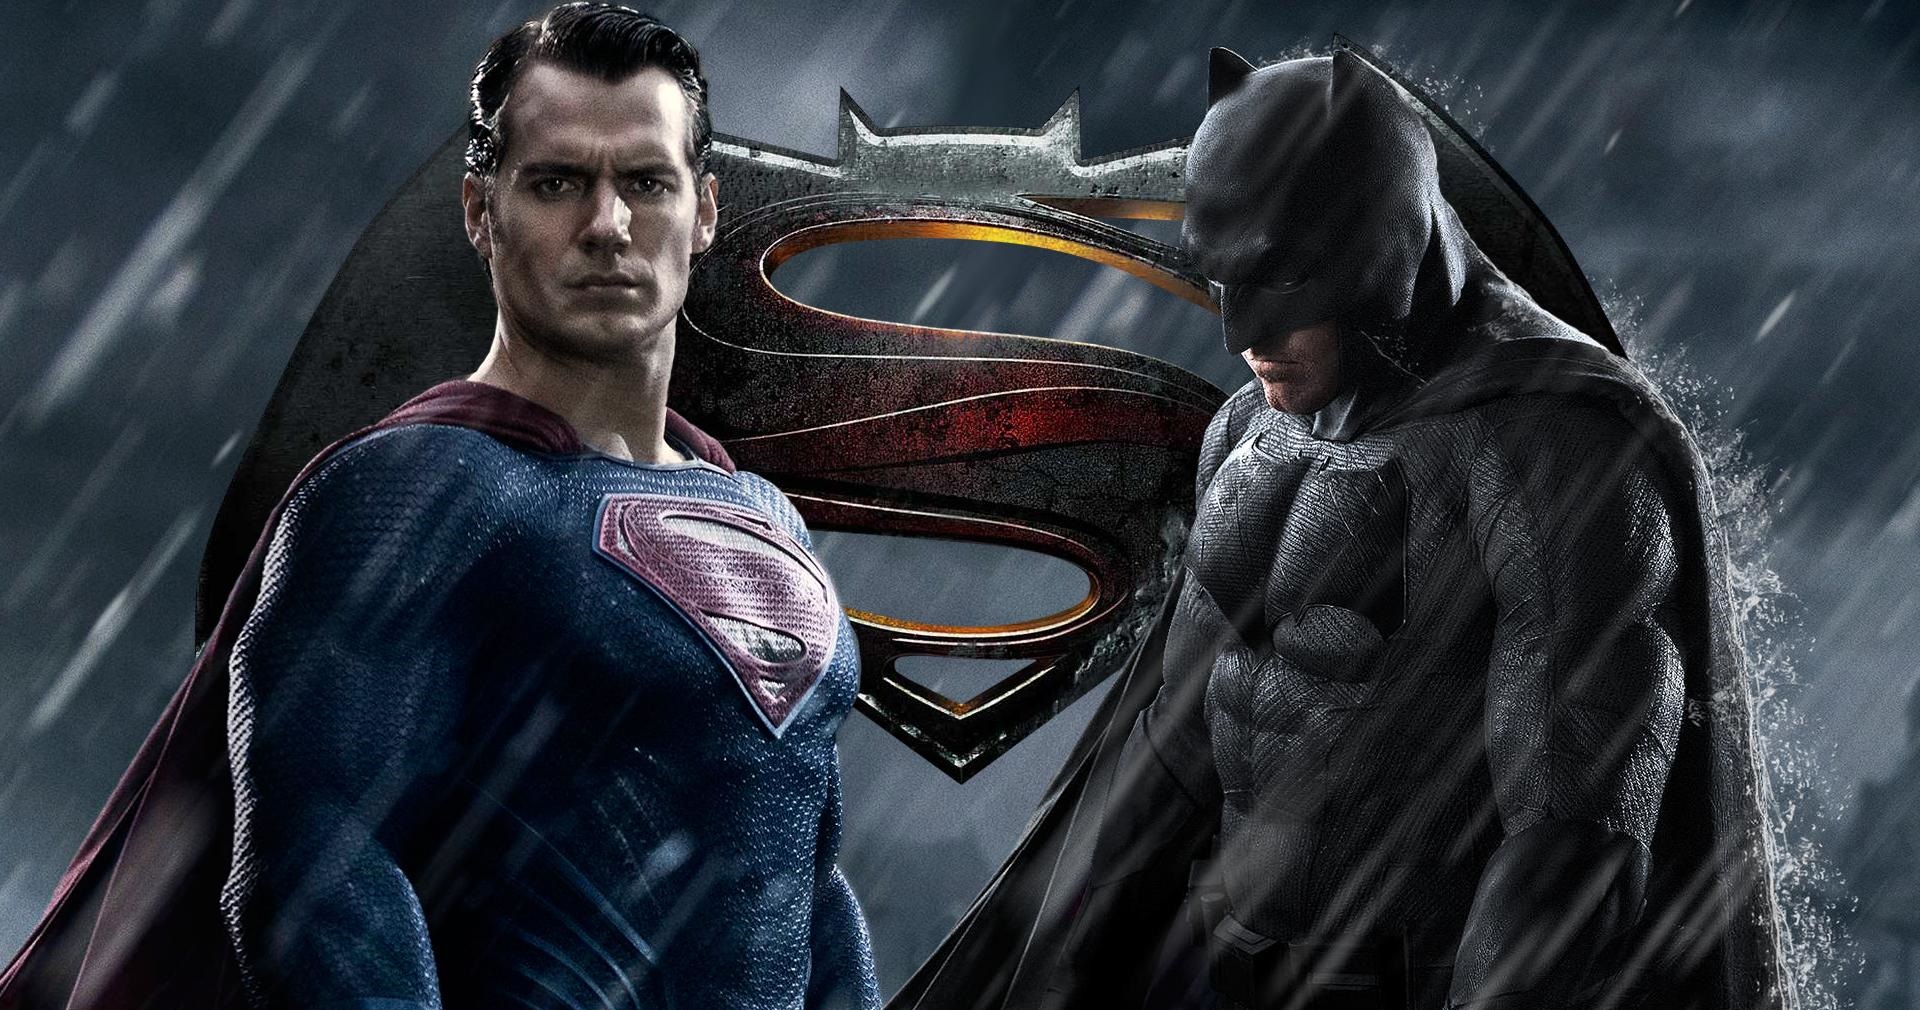 Watch The Full Length Leaked Trailer Of 'Batman Vs. Superman' Right Here RVCJ Media